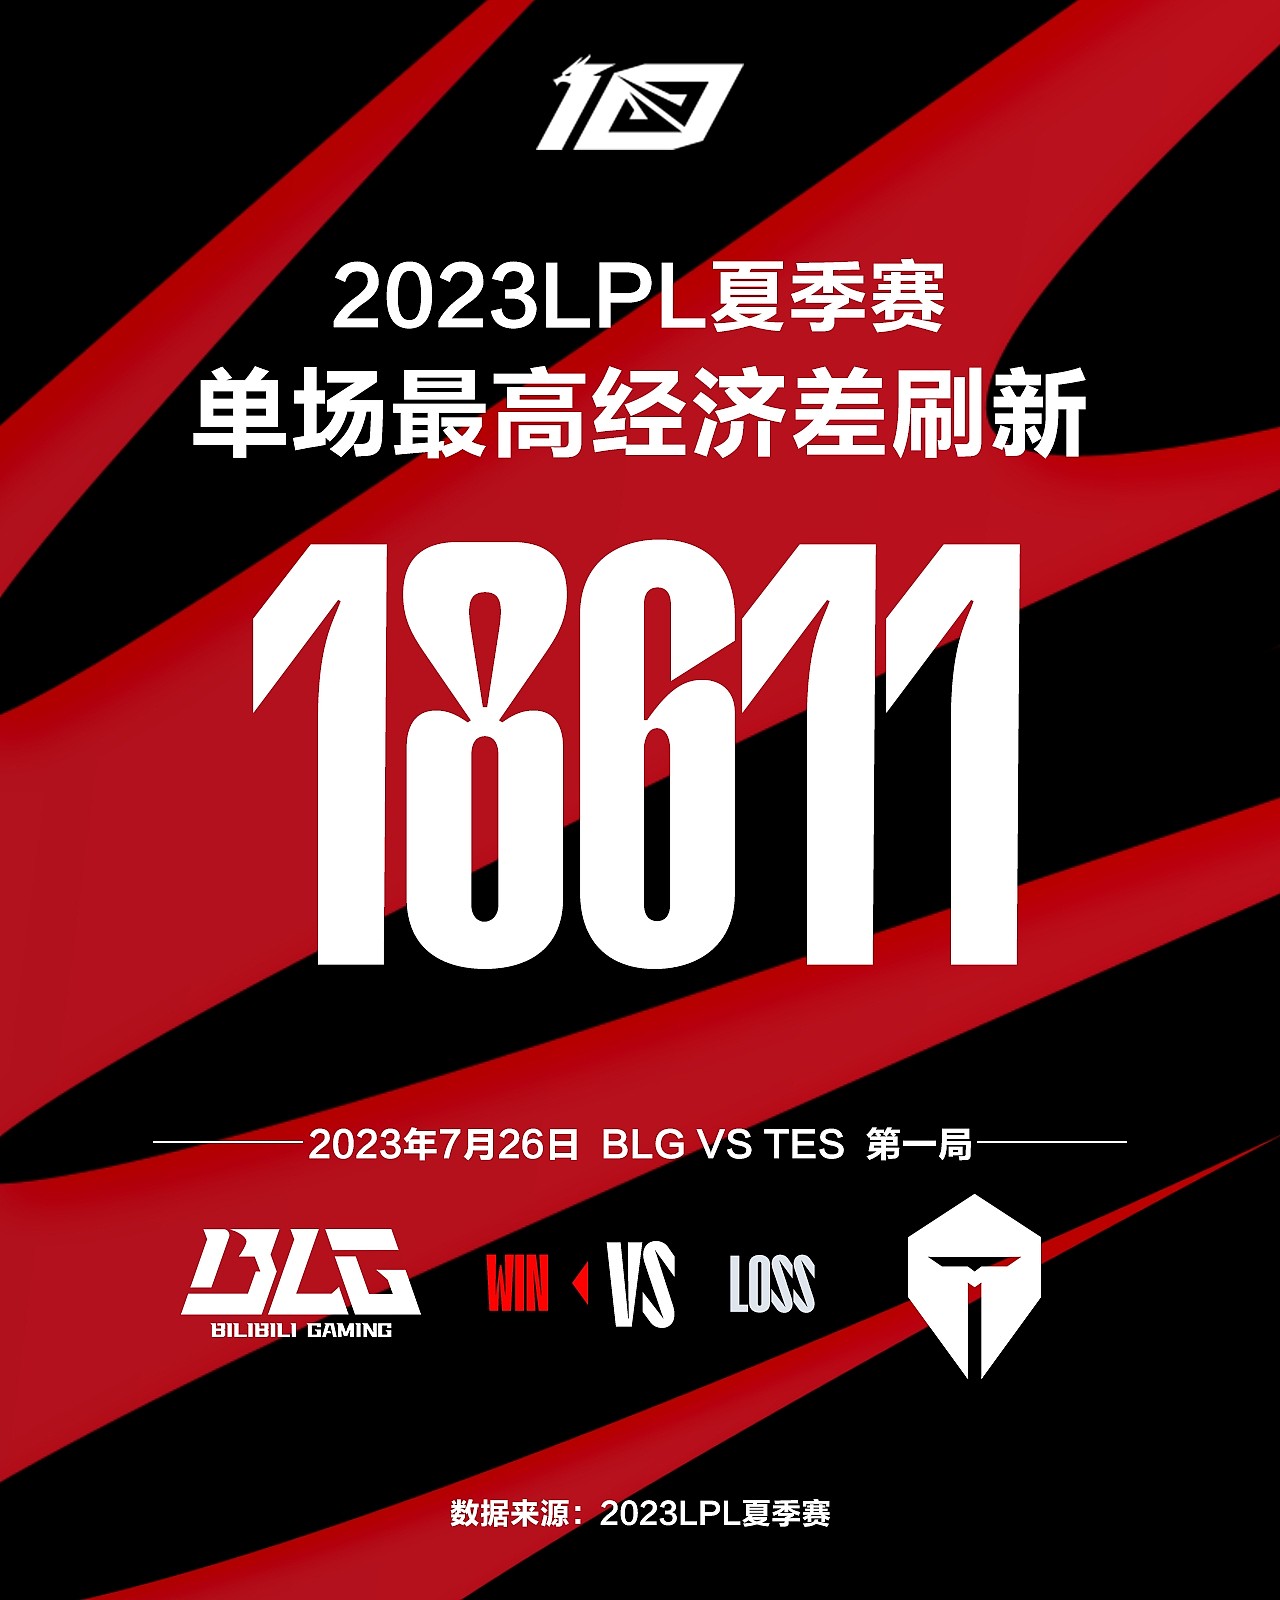 BLGvsTES首局 刷新2023LPL夏季赛单场最高经济差纪录18611 - 1